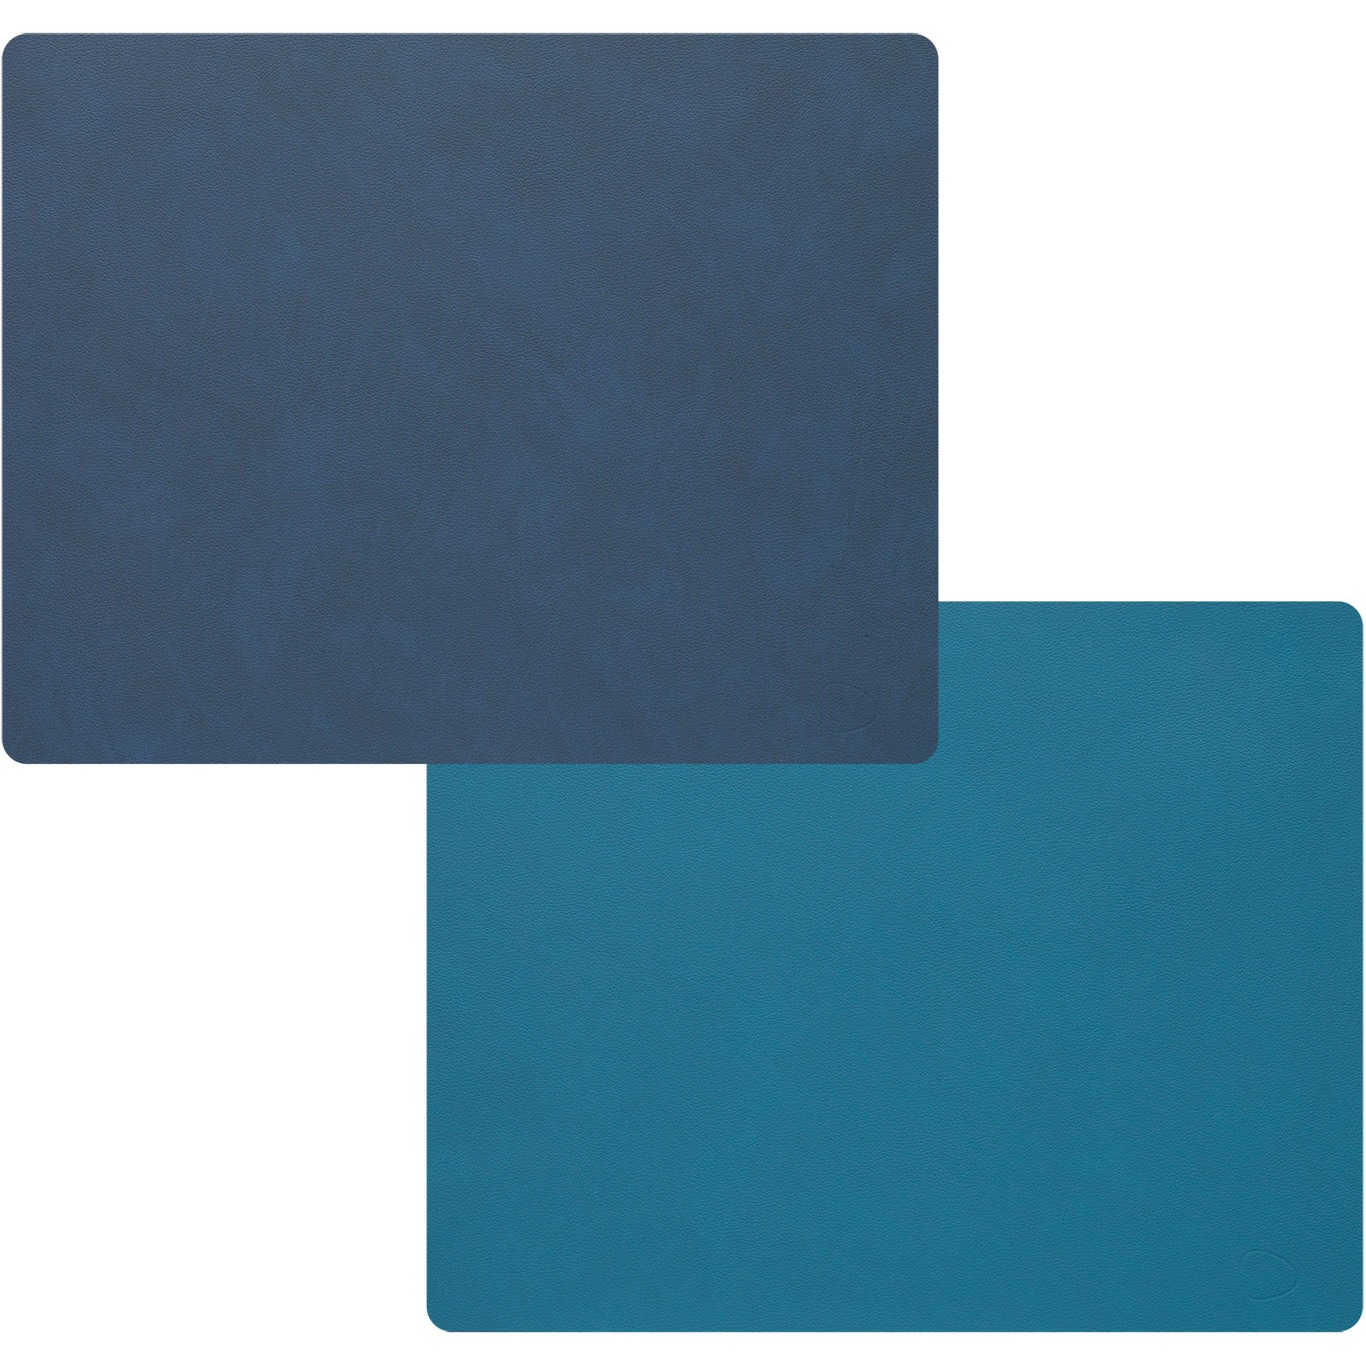 Square Double Tischset L 35x45 cm, Petrol/Midnight Blue